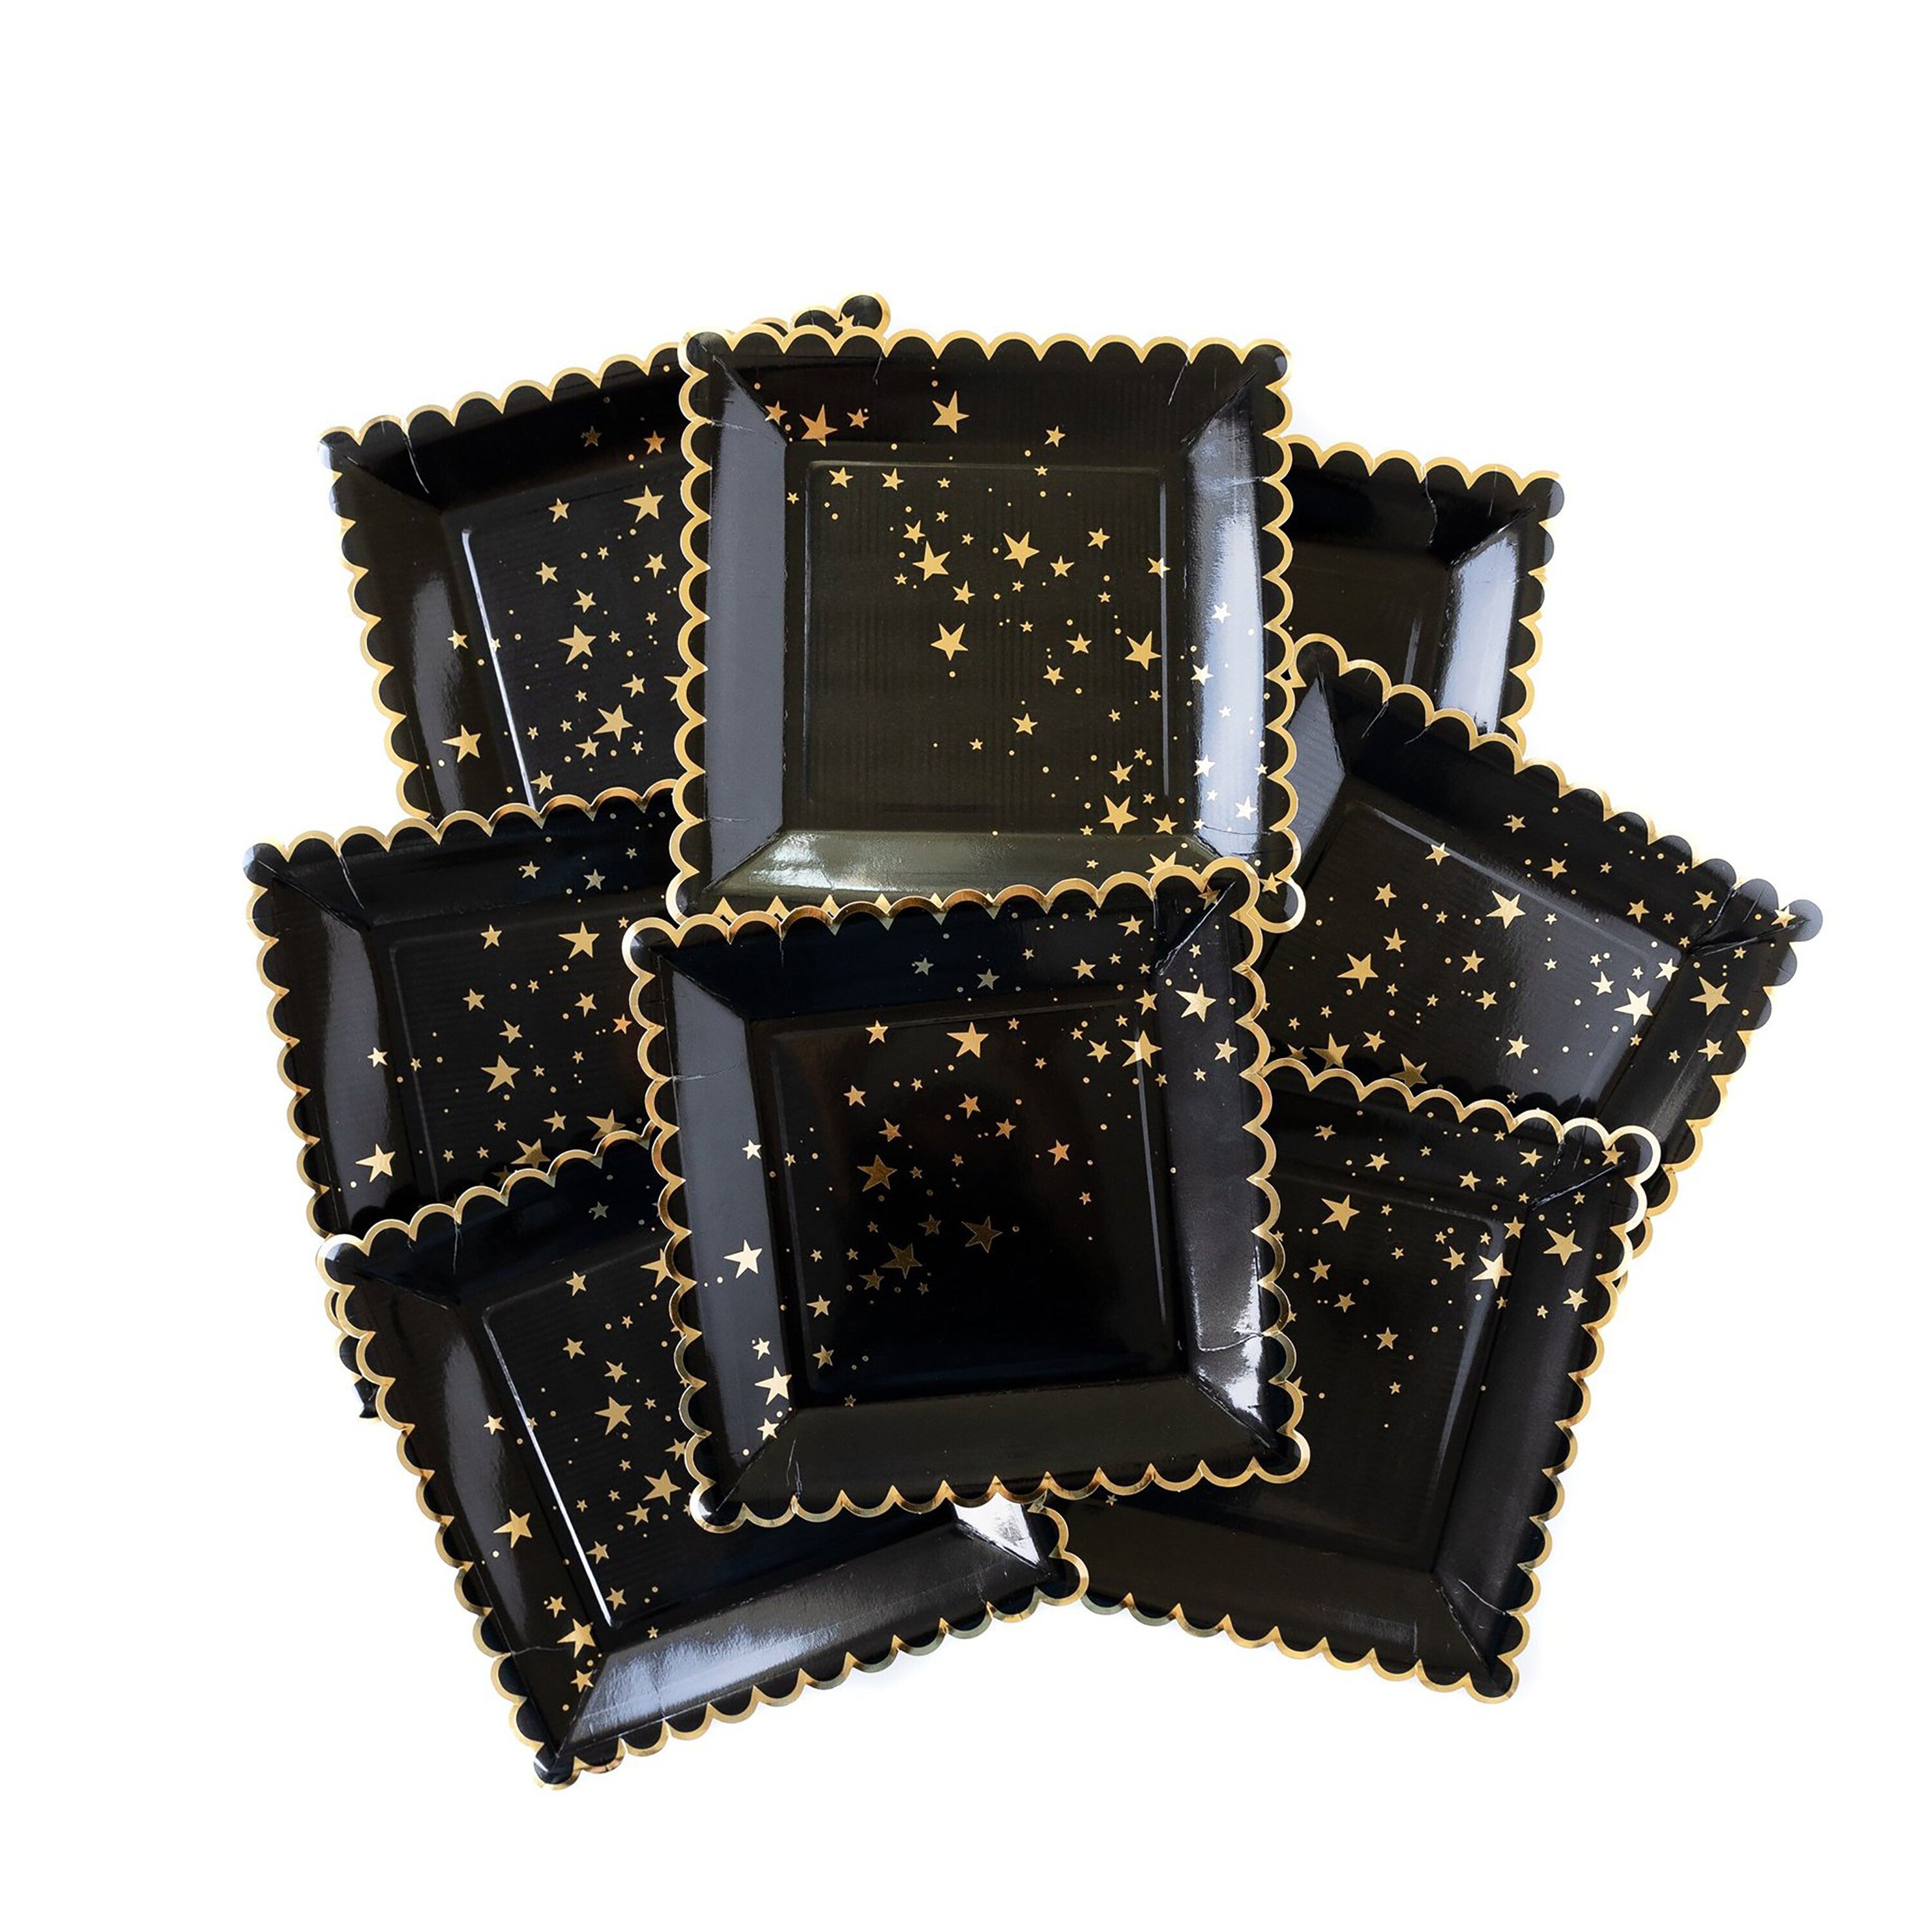 Star Paper Plates | Halloween Paper Plates - Black and Gold Paper Plate - Gold Star Paper Plate - Halloween Dinner Plates - Halloween Plates